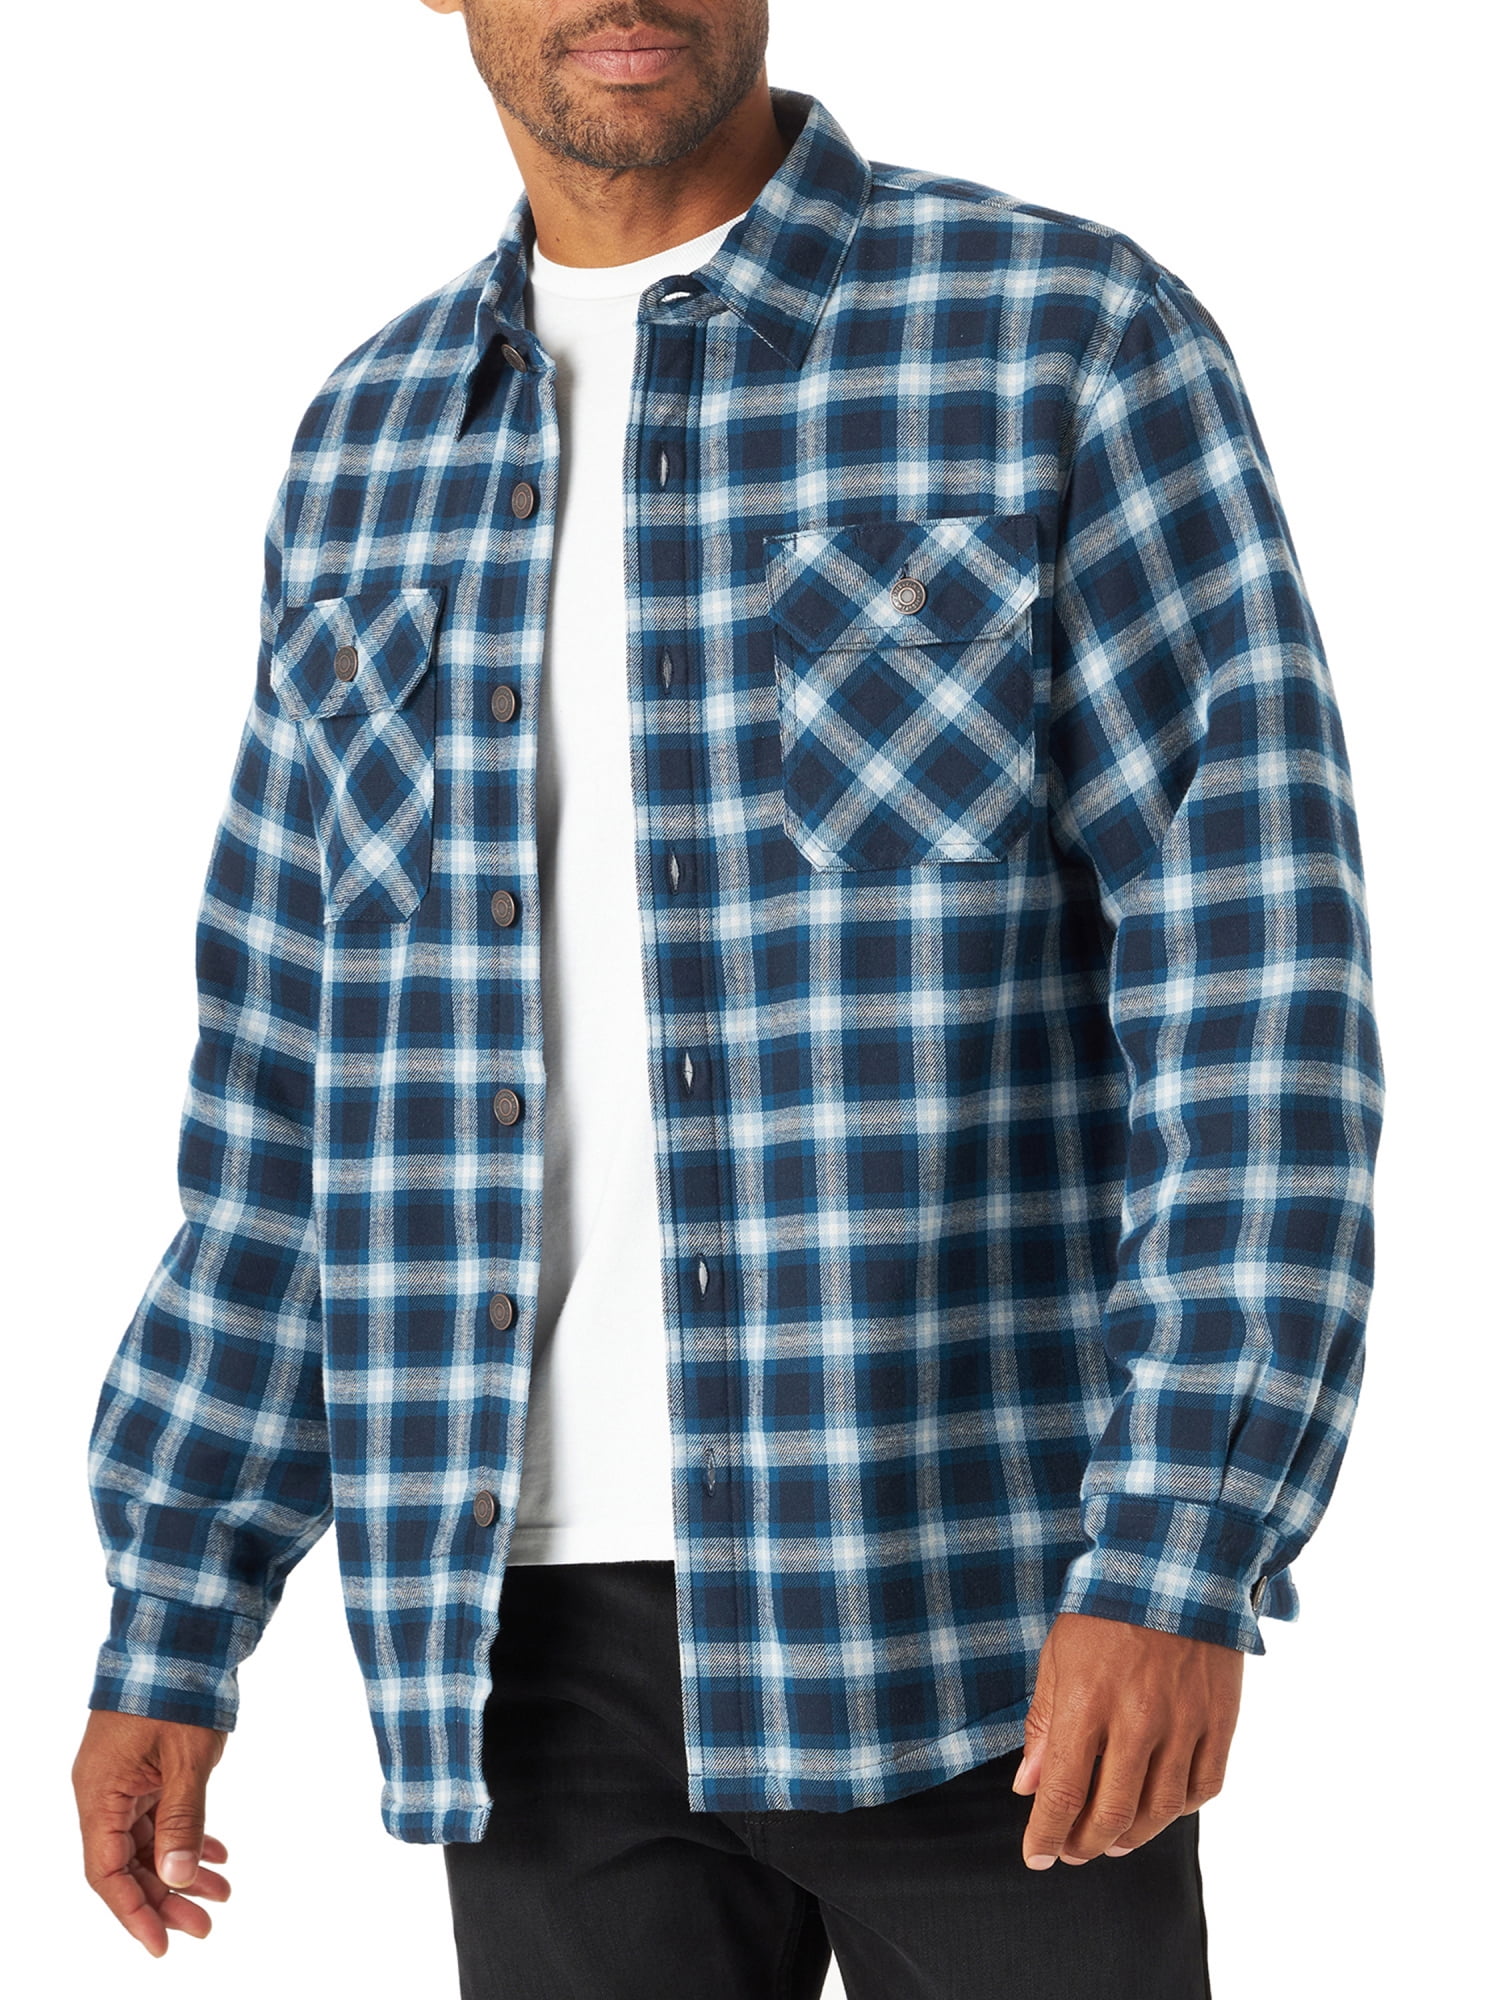 Carhartt Men's Jacket Shirt Plus Size 4XL Gray Sherpa Lined Snaps Green Plaid